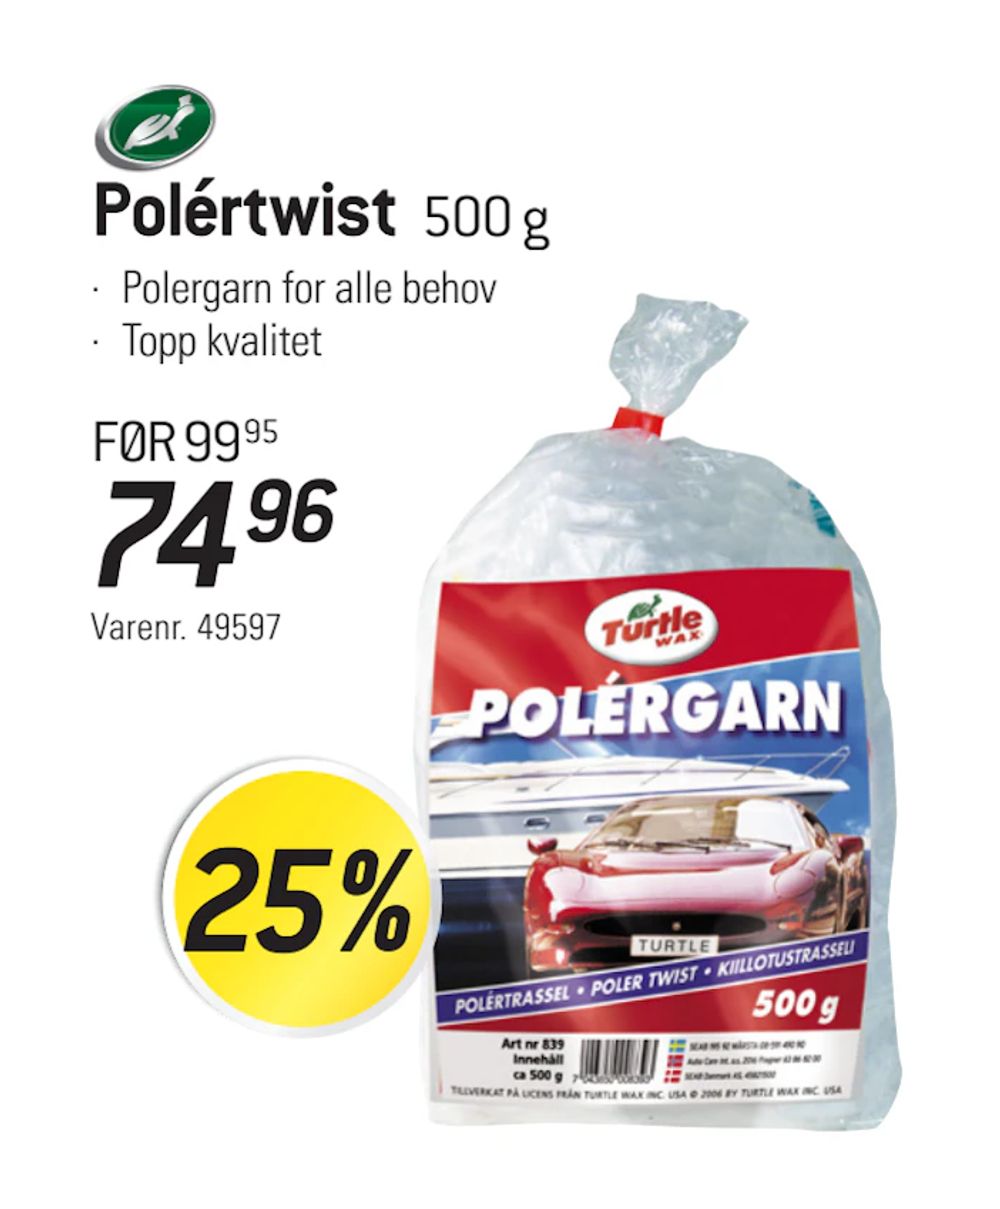 Tilbud på Polértwist 500 g fra thansen til 74,96 kr